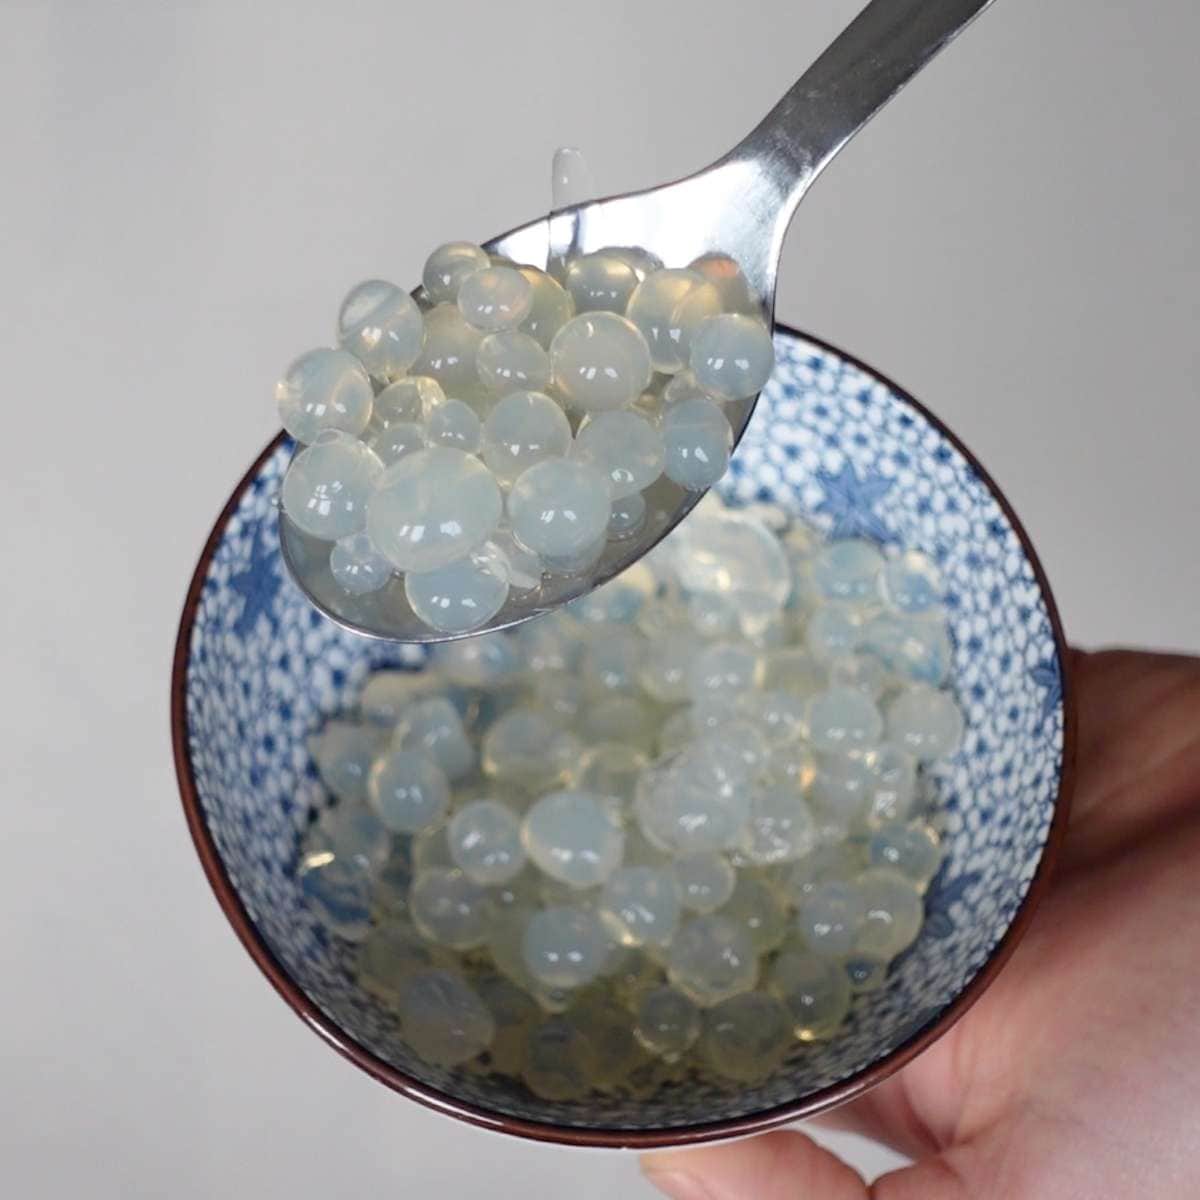 crystal boba made from agar agar powder